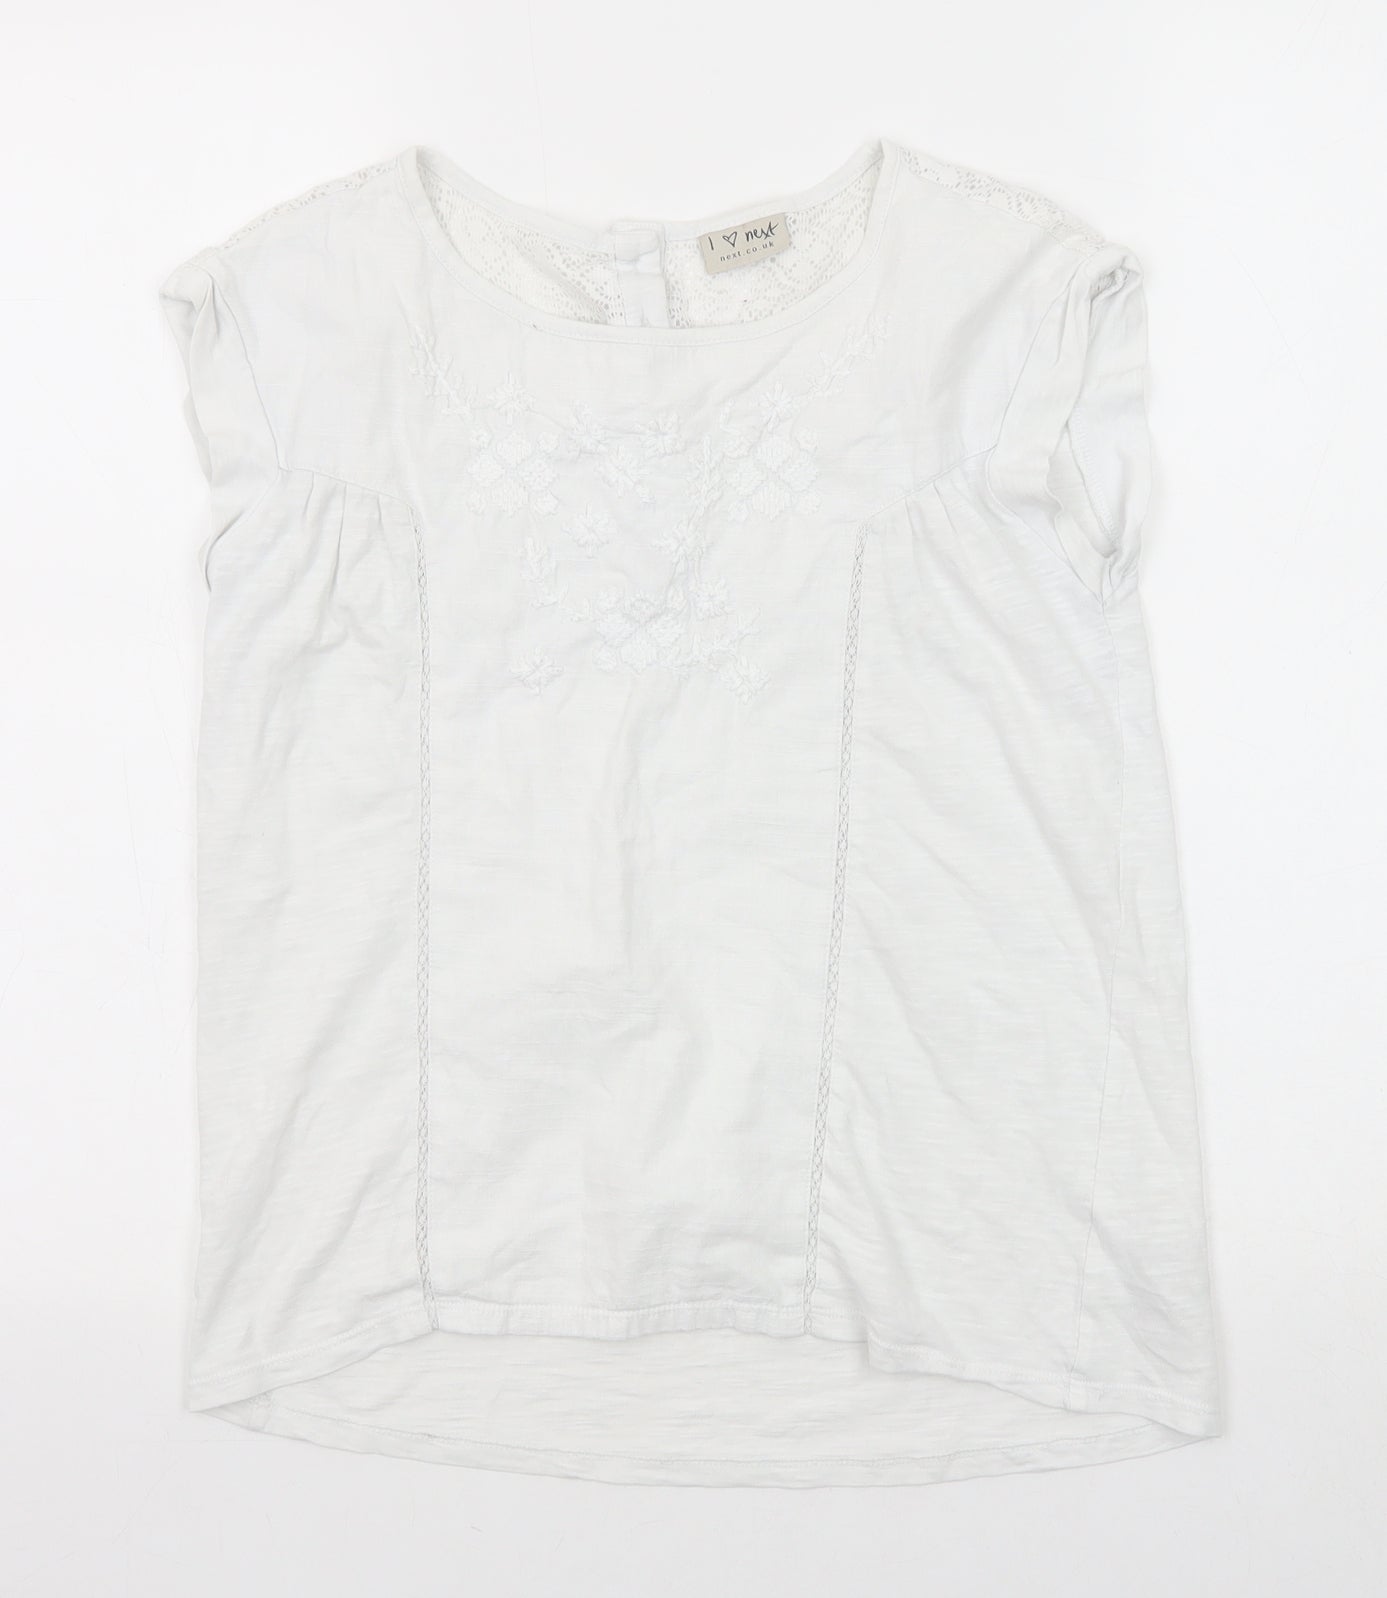 NEXT Girls White Cotton Basic T-Shirt Size 11 Years Round Neck Button - Lace Detail